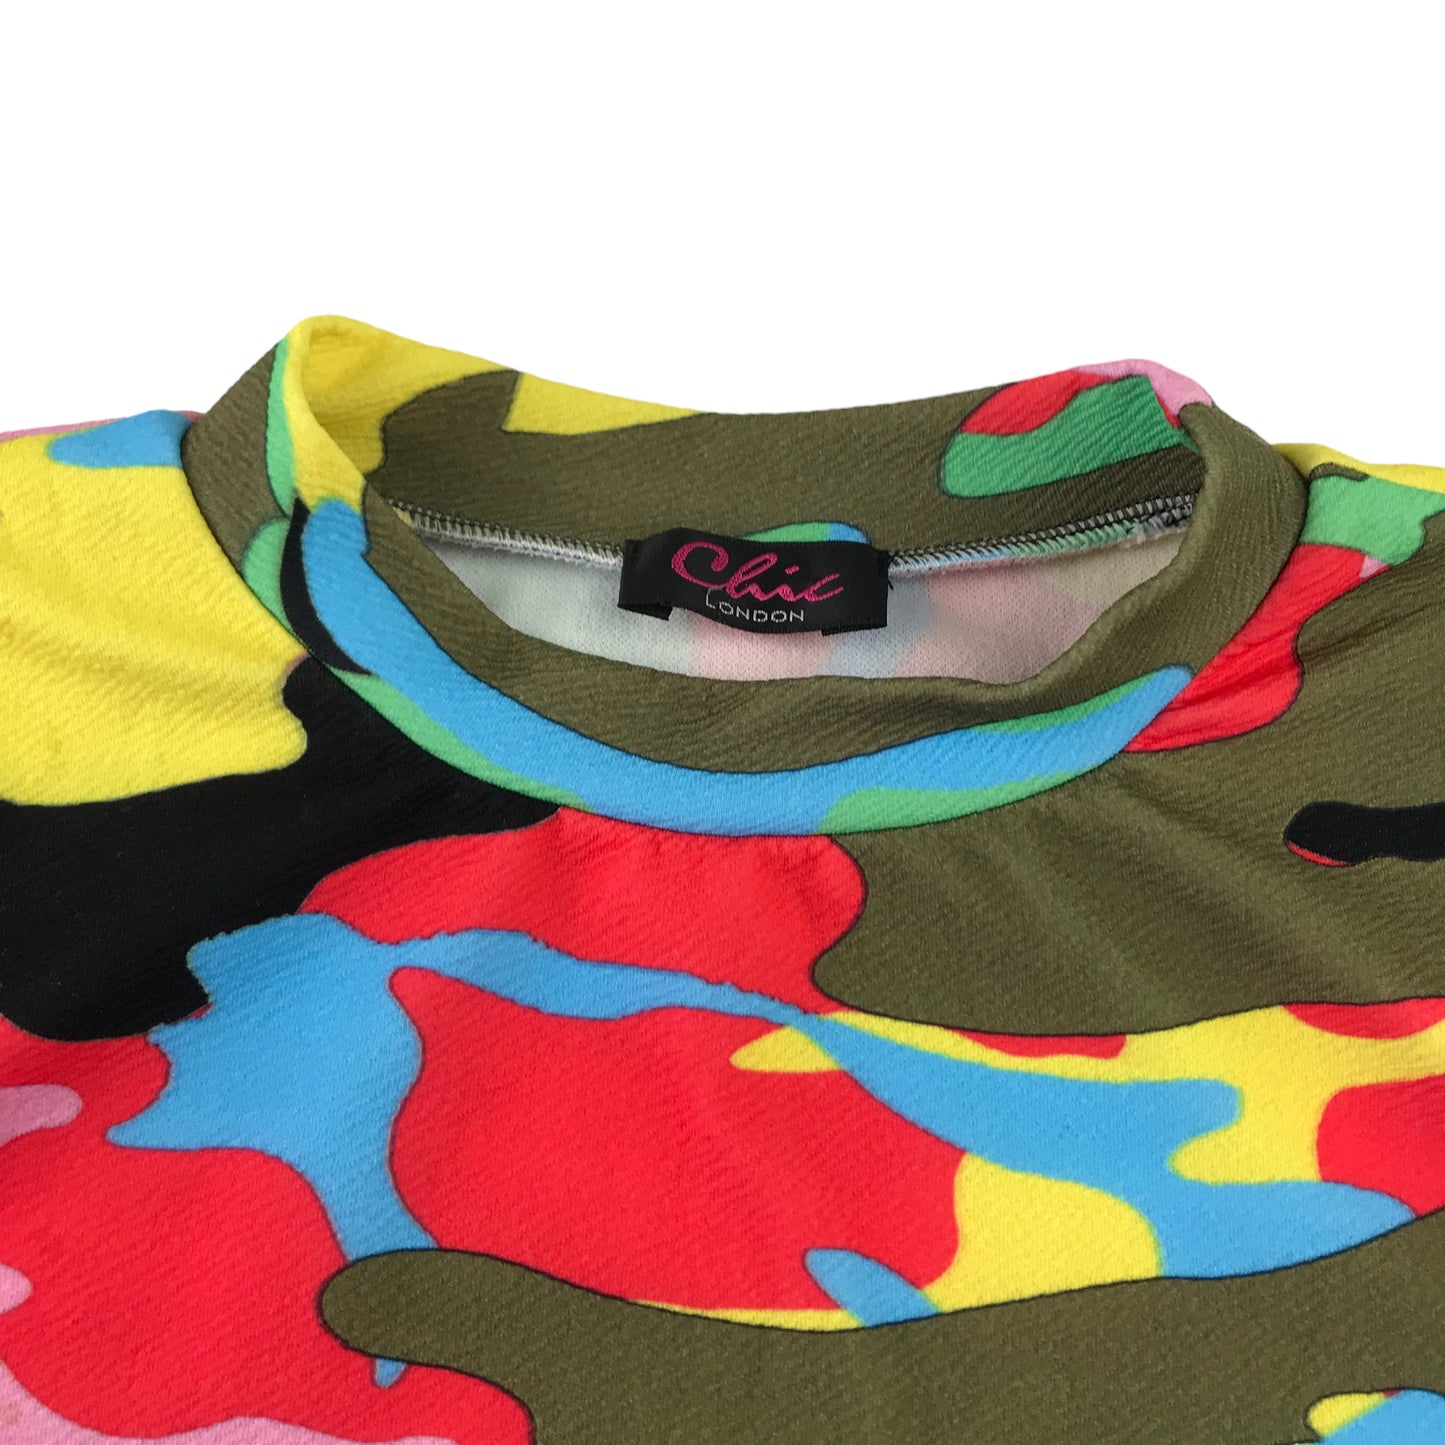 Chic London T-shirt jumper 11-12 years multicolour camo pattern light jumper